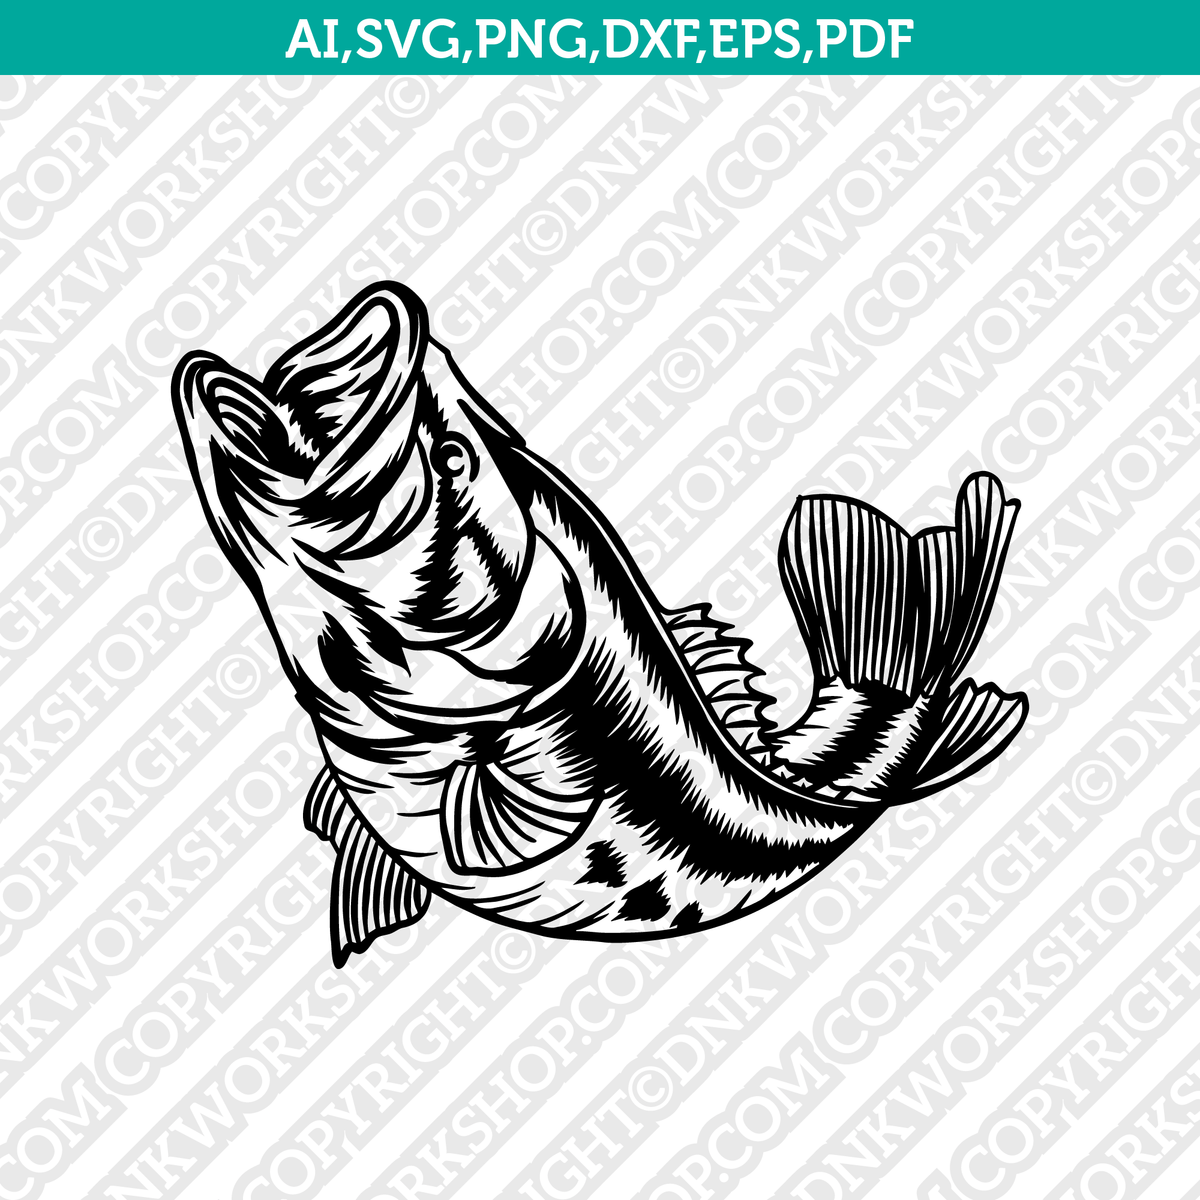 bass fish jumping clip art